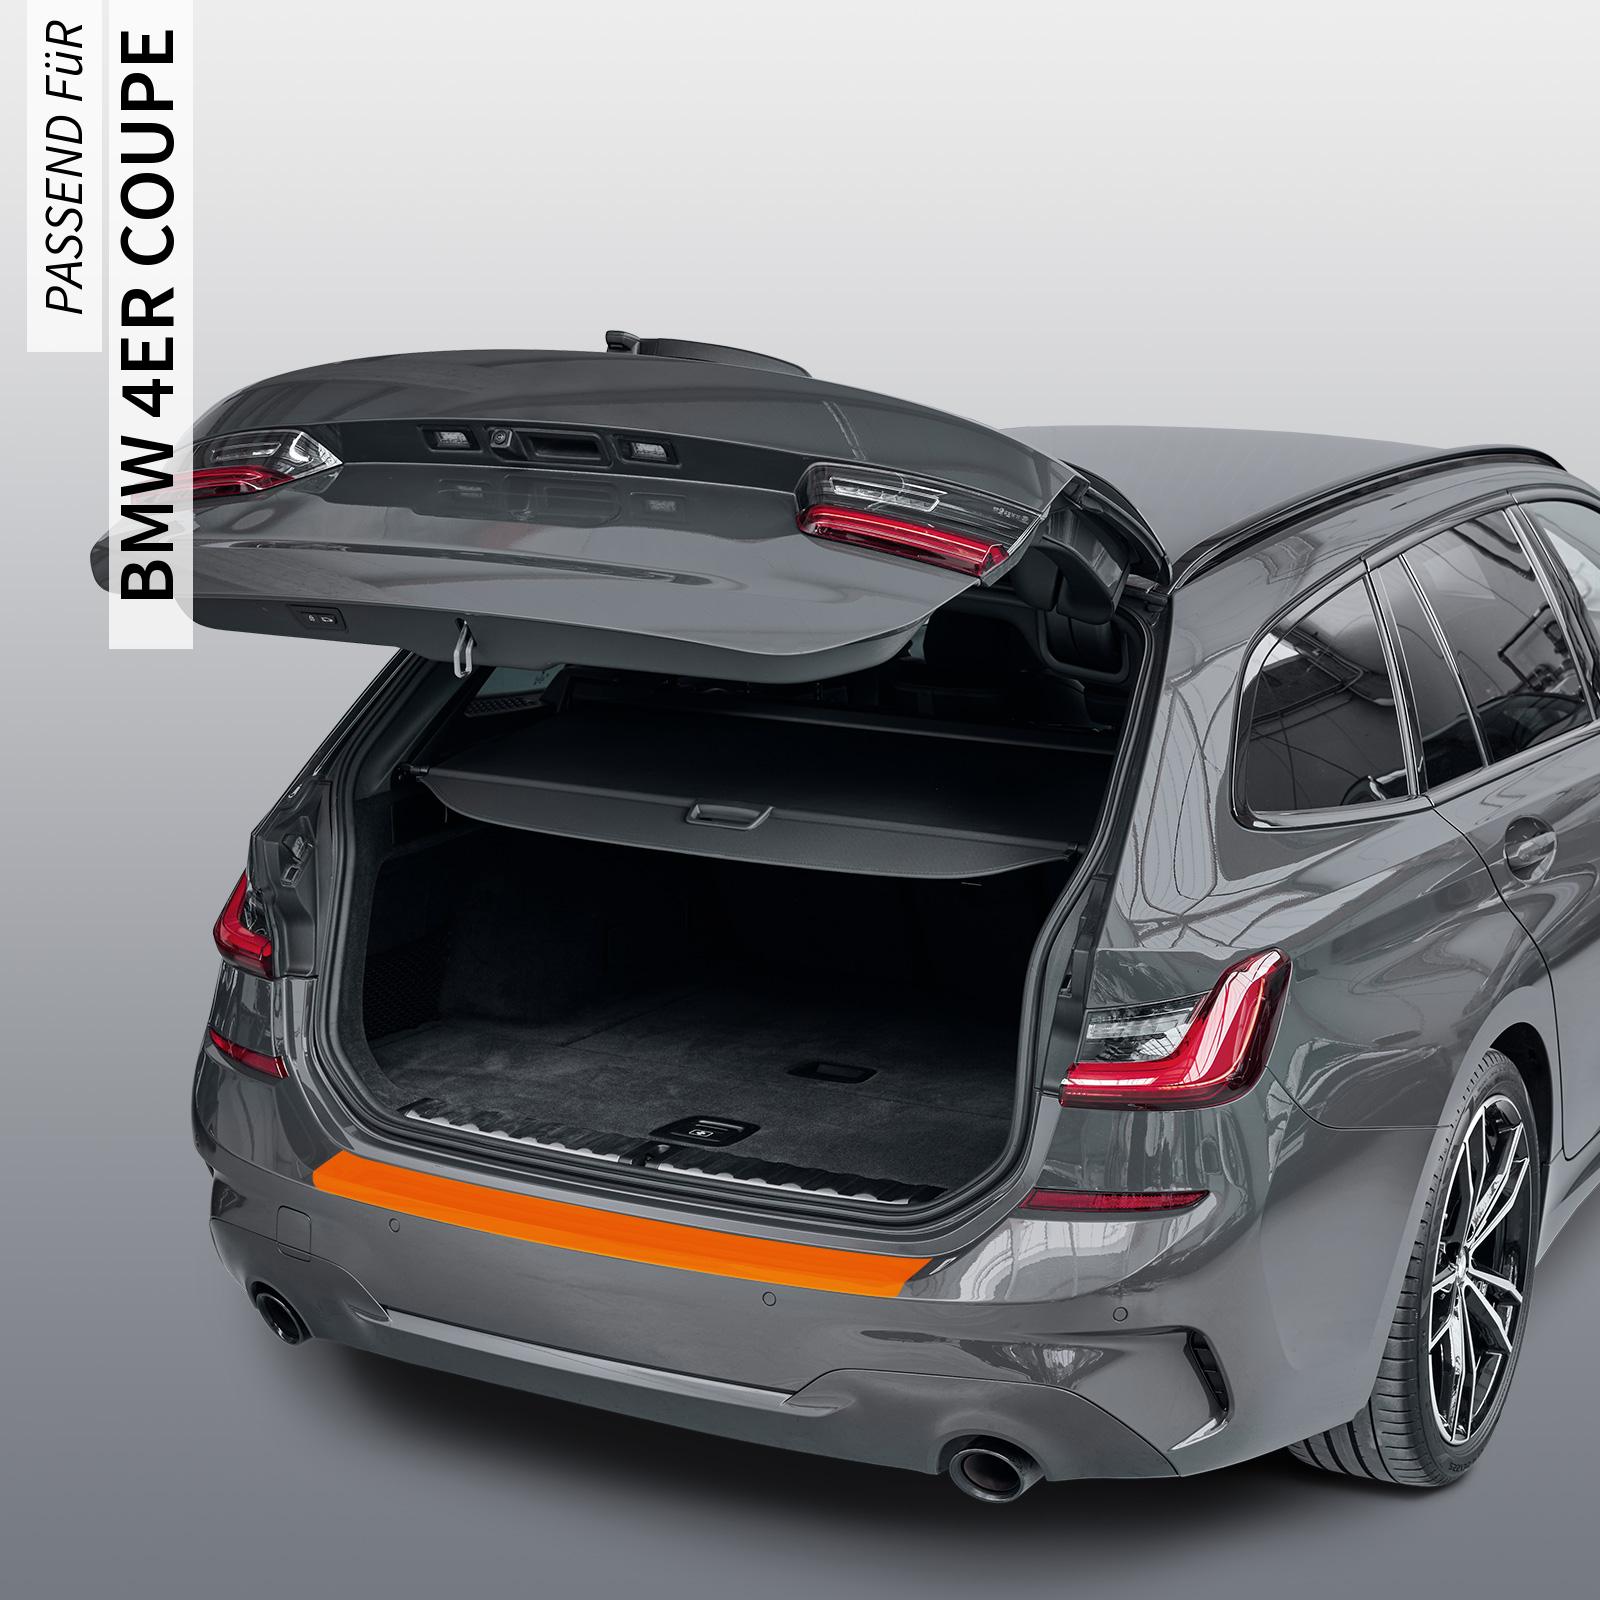 Ladekantenschutzfolie - Transparent Glatt MATT 110 µm stark  für BMW 4er Coupe Typ F32, BJ 2013-2020